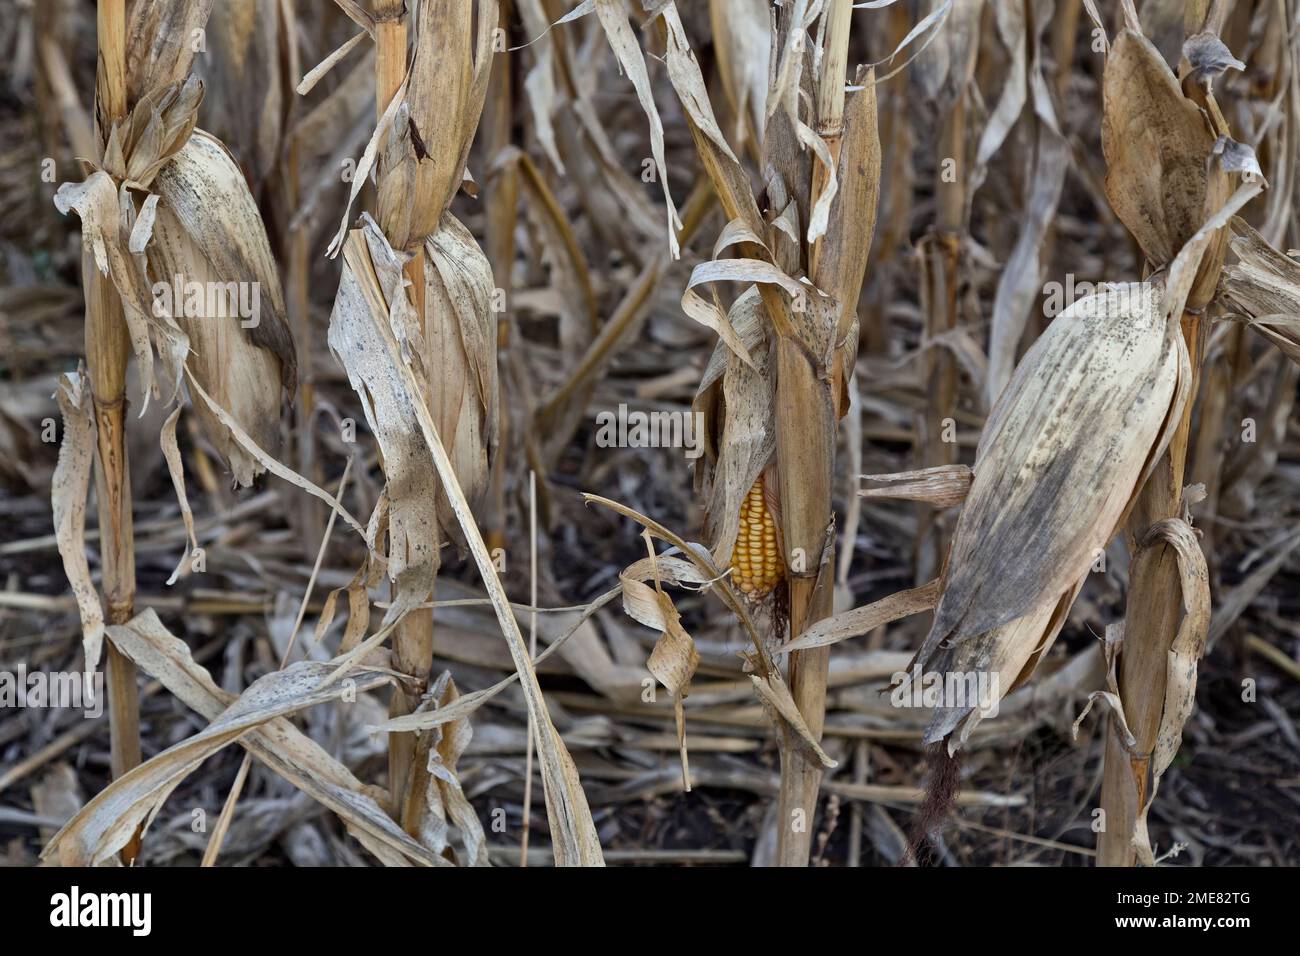 Corn ears 'Zea mays' on stalks, field crop failure, lack of rainfall,  Kansas. Stock Photo